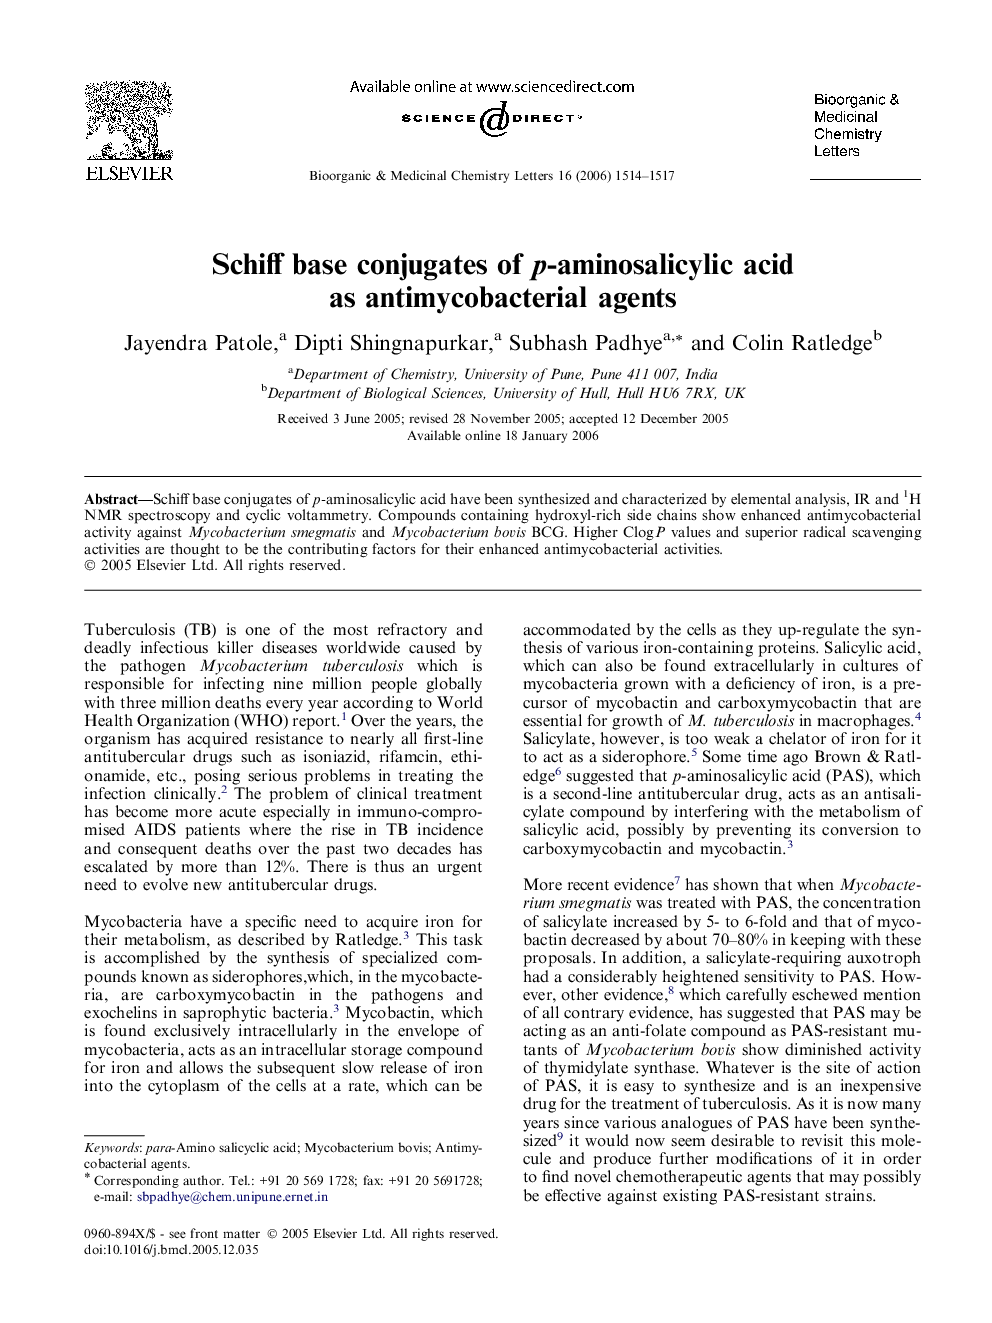 Schiff base conjugates of p-aminosalicylic acid as antimycobacterial agents